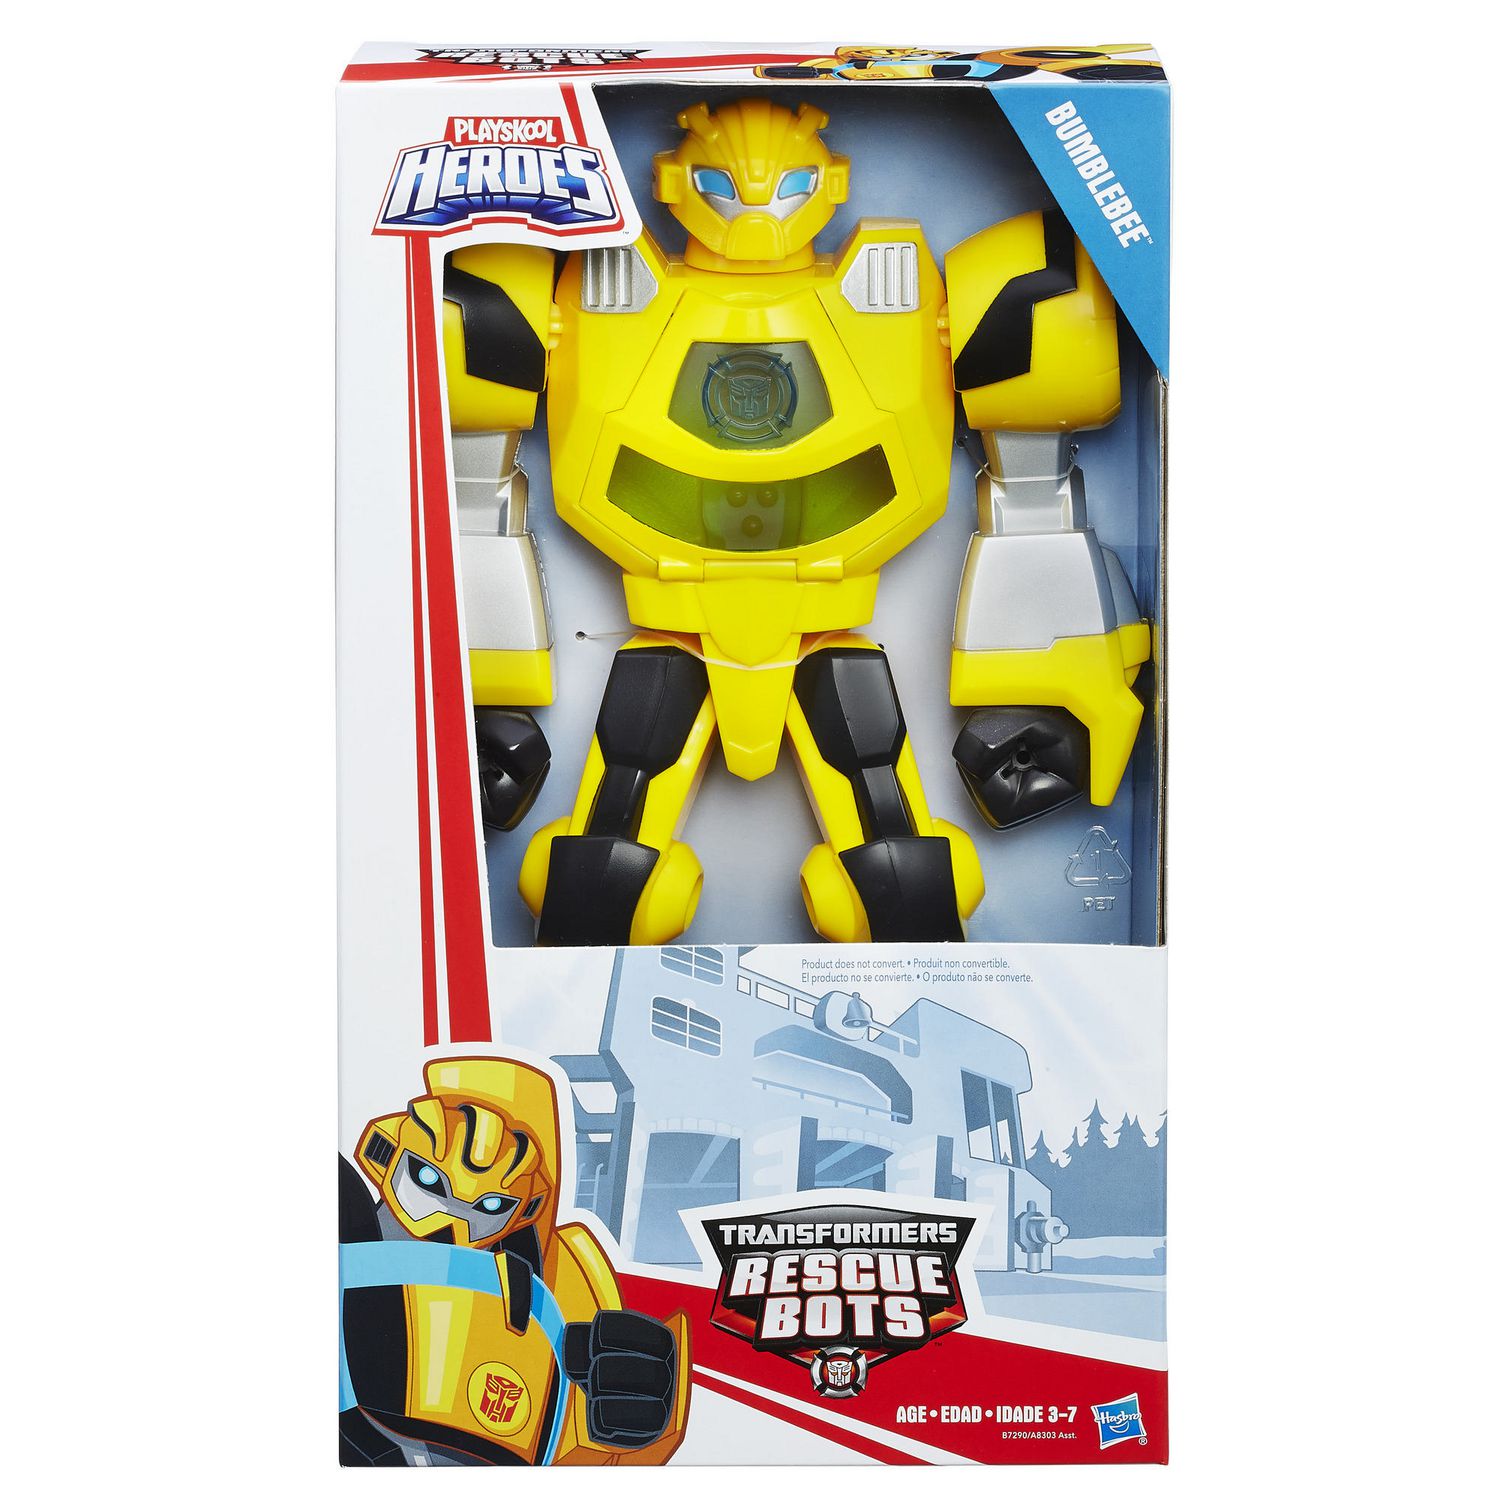 hasbro transformer rescue bots